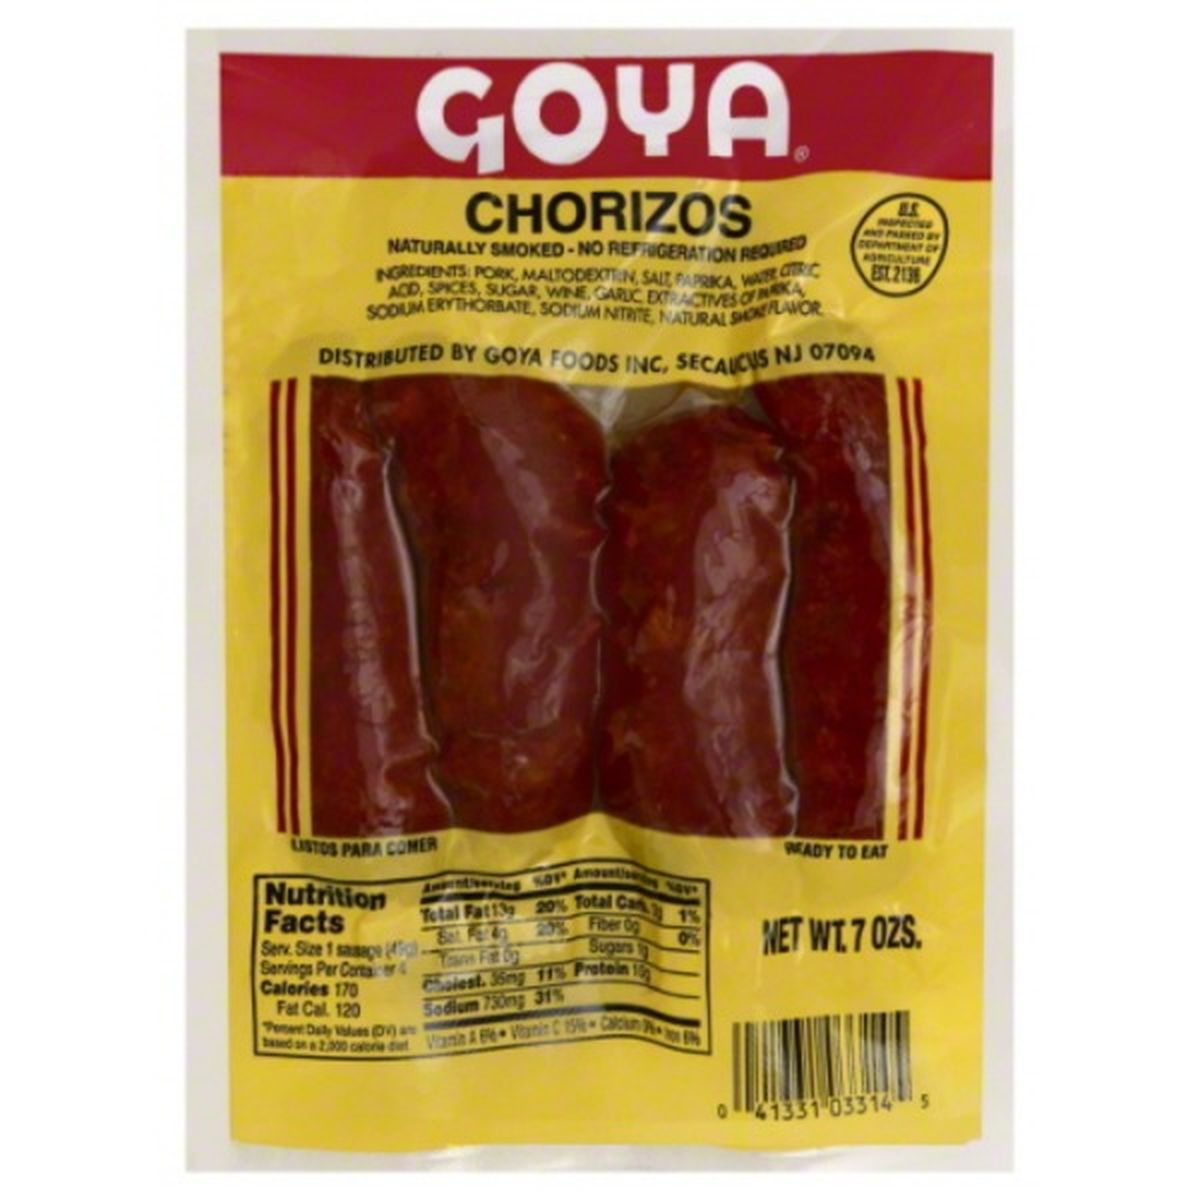 Calories in Goya Chorizos